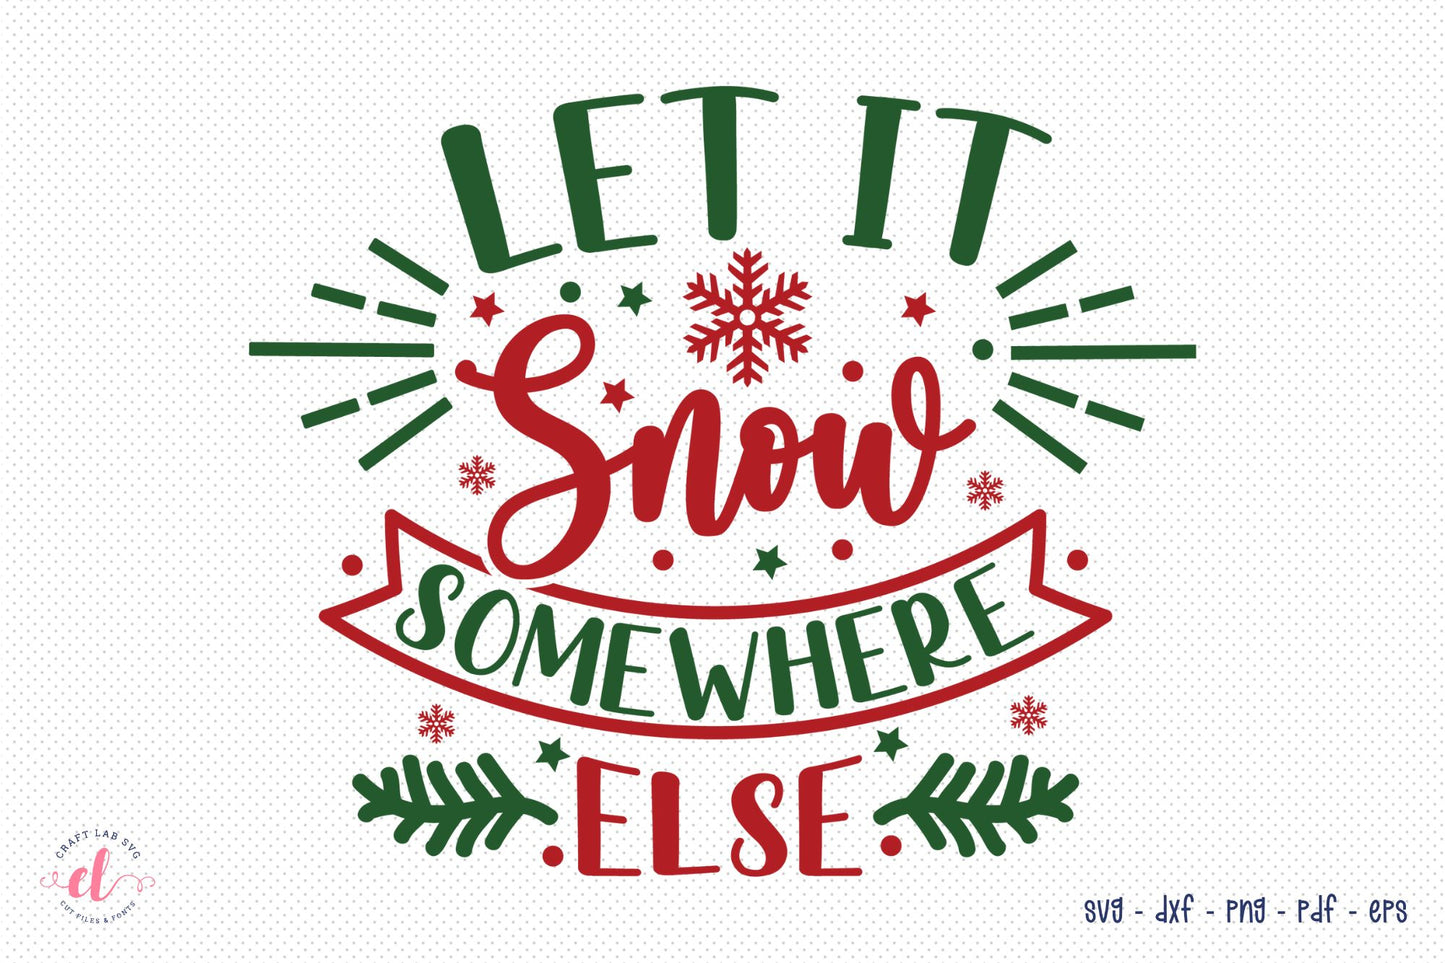 Let It Snow Somewhere Else | Free Christmas SVG